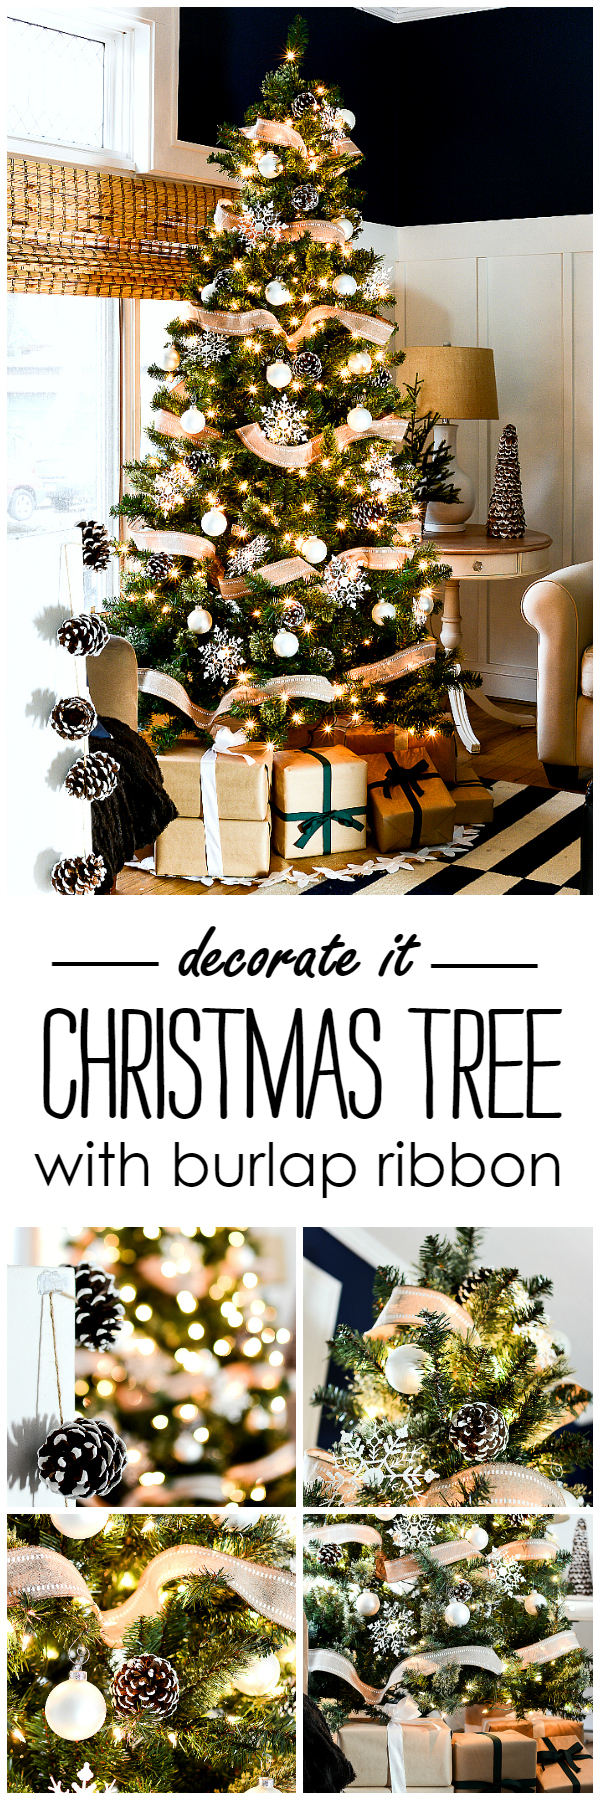 How to Make Burlap Christmas Trees